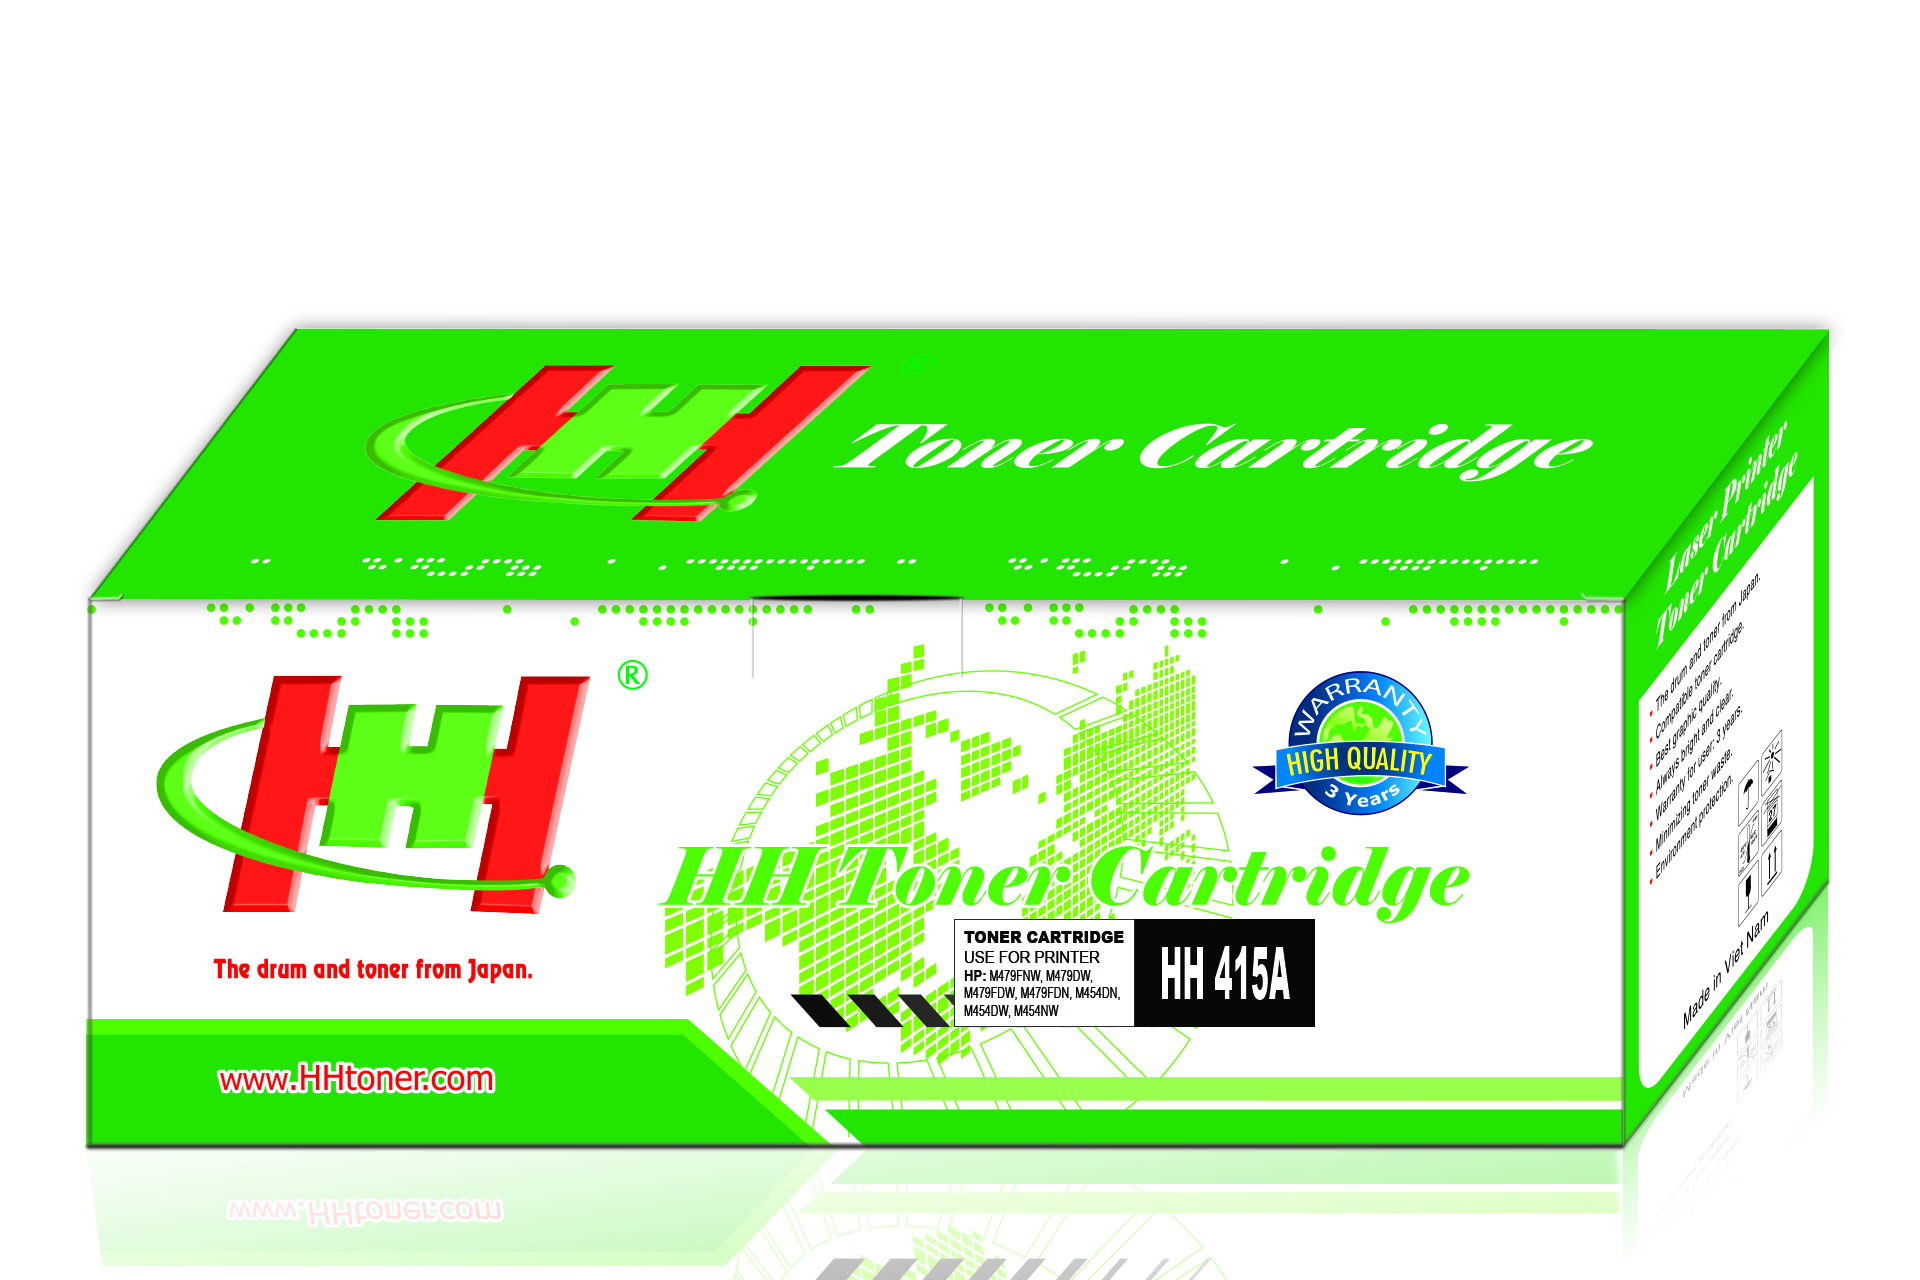 Mực máy in HP Color LaserJet Pro MFP M454 M479 HP 415A Black (W2030A) - Thương hiệu HH